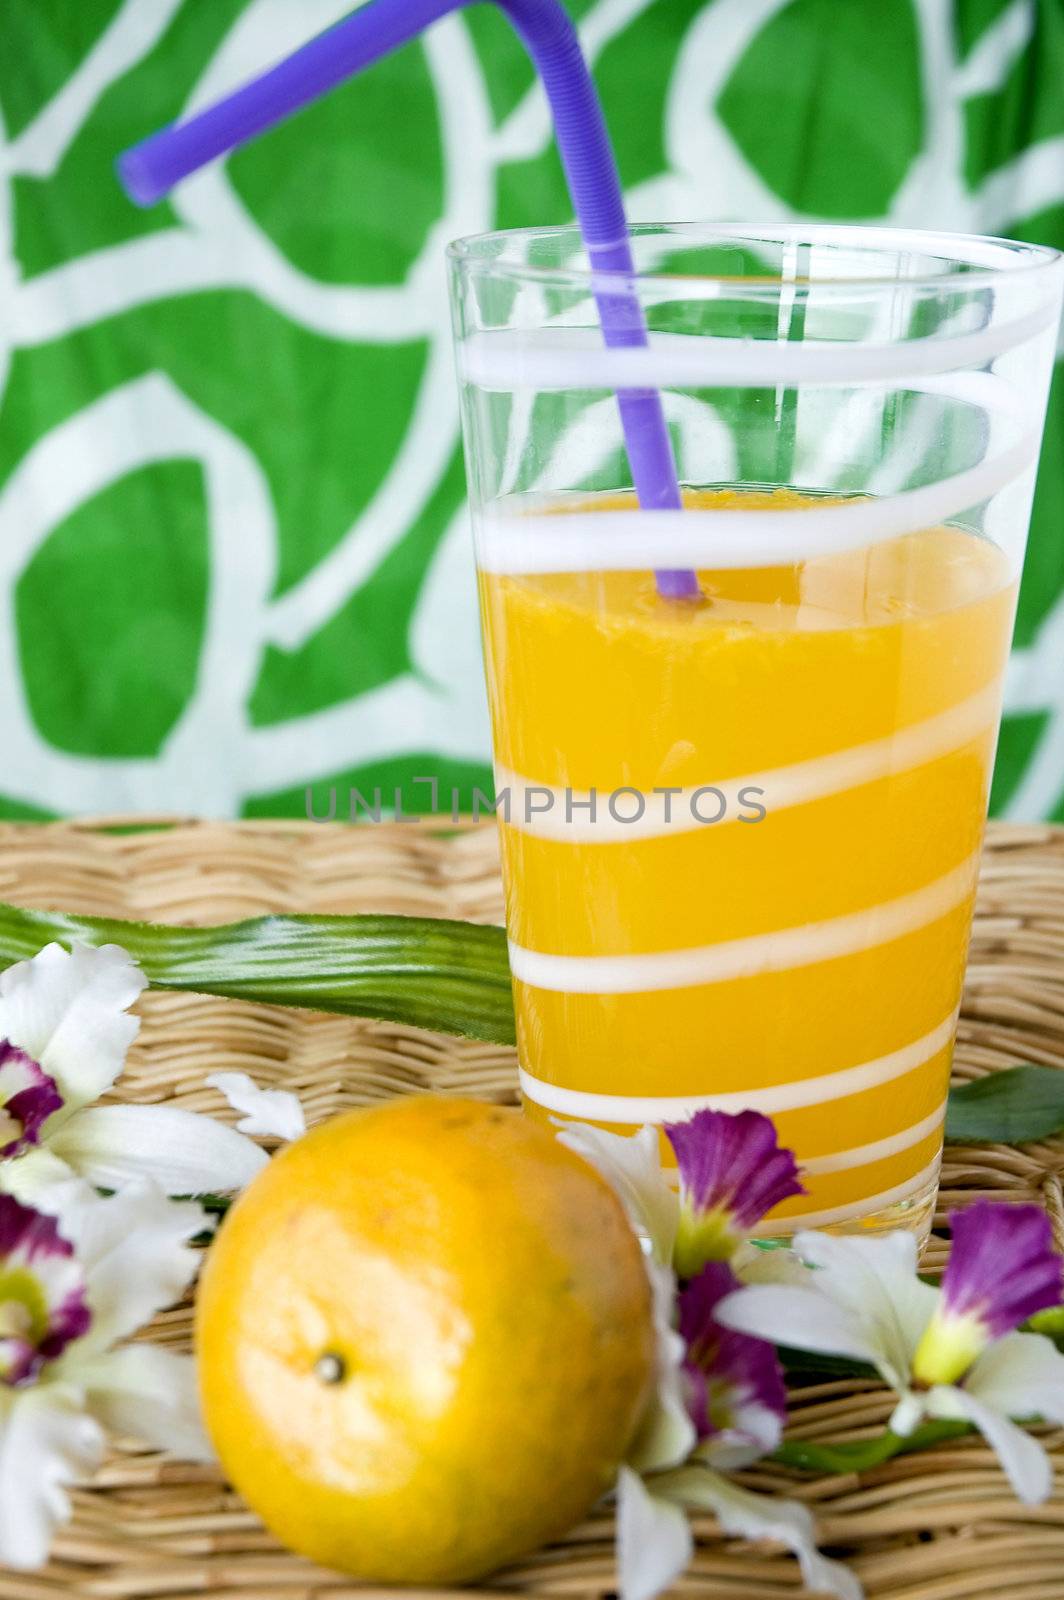 orange with glass of fresh orange juice